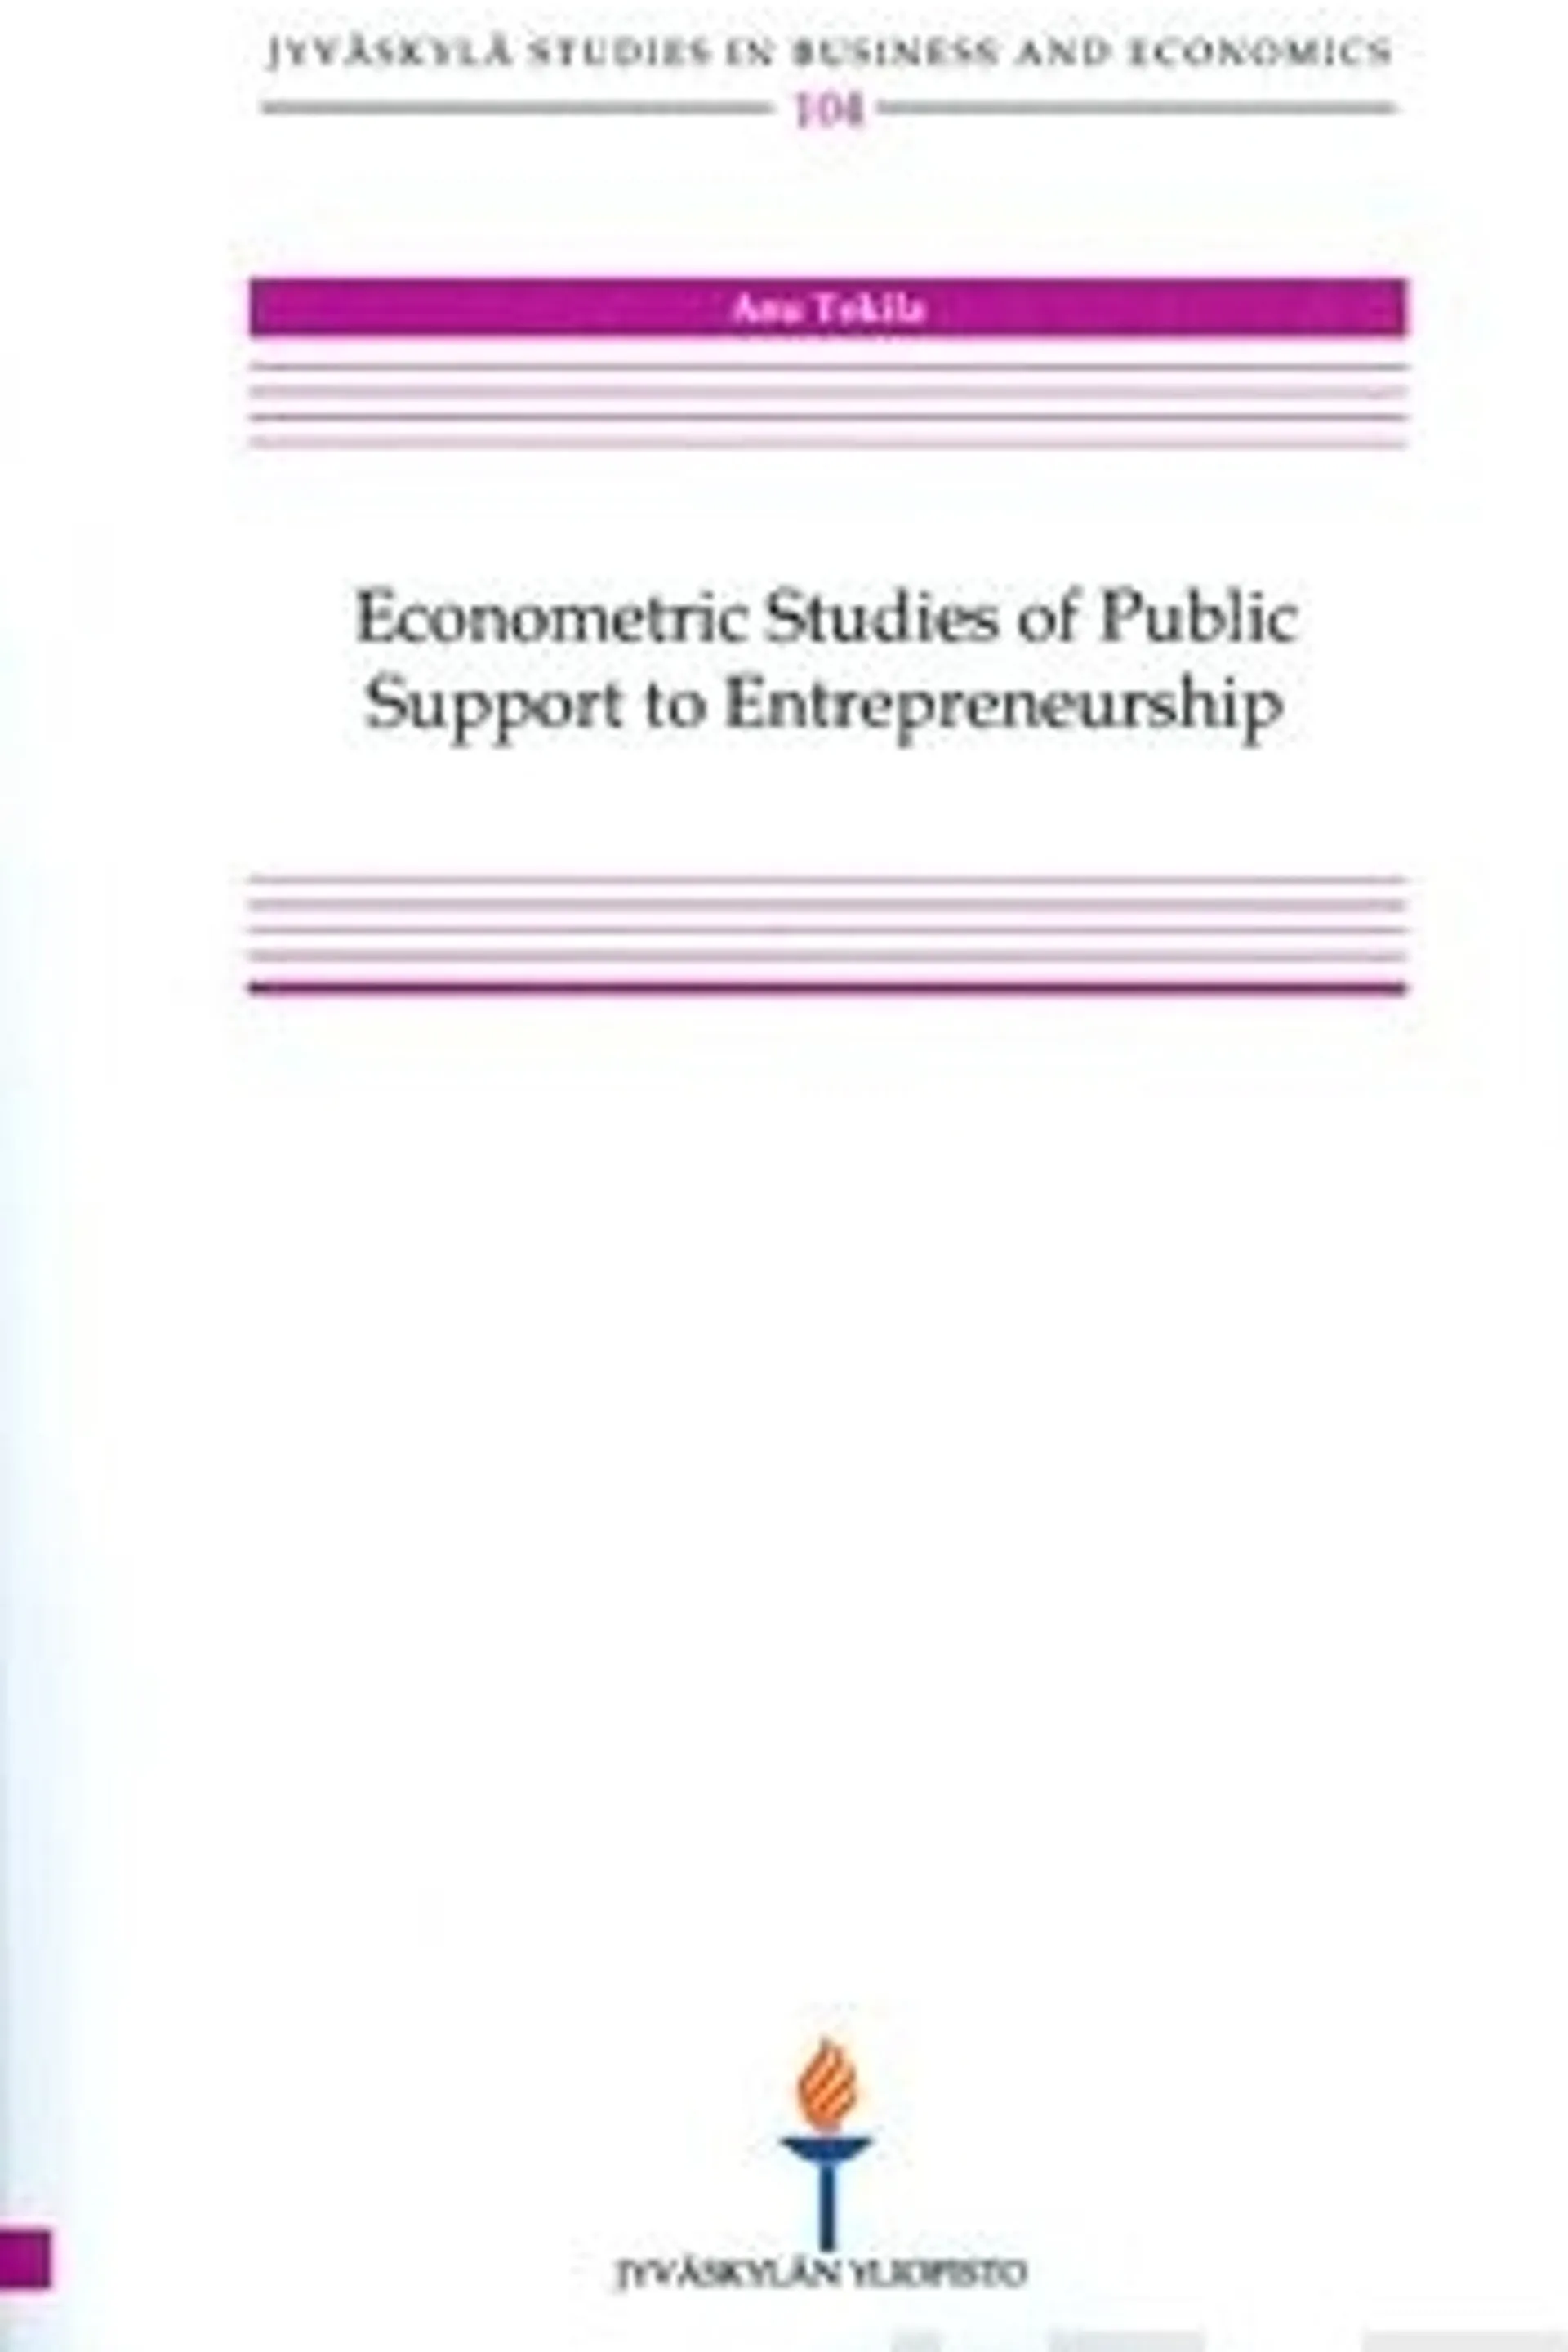 Tokila, Econometric studies of public support to entrepreneurship